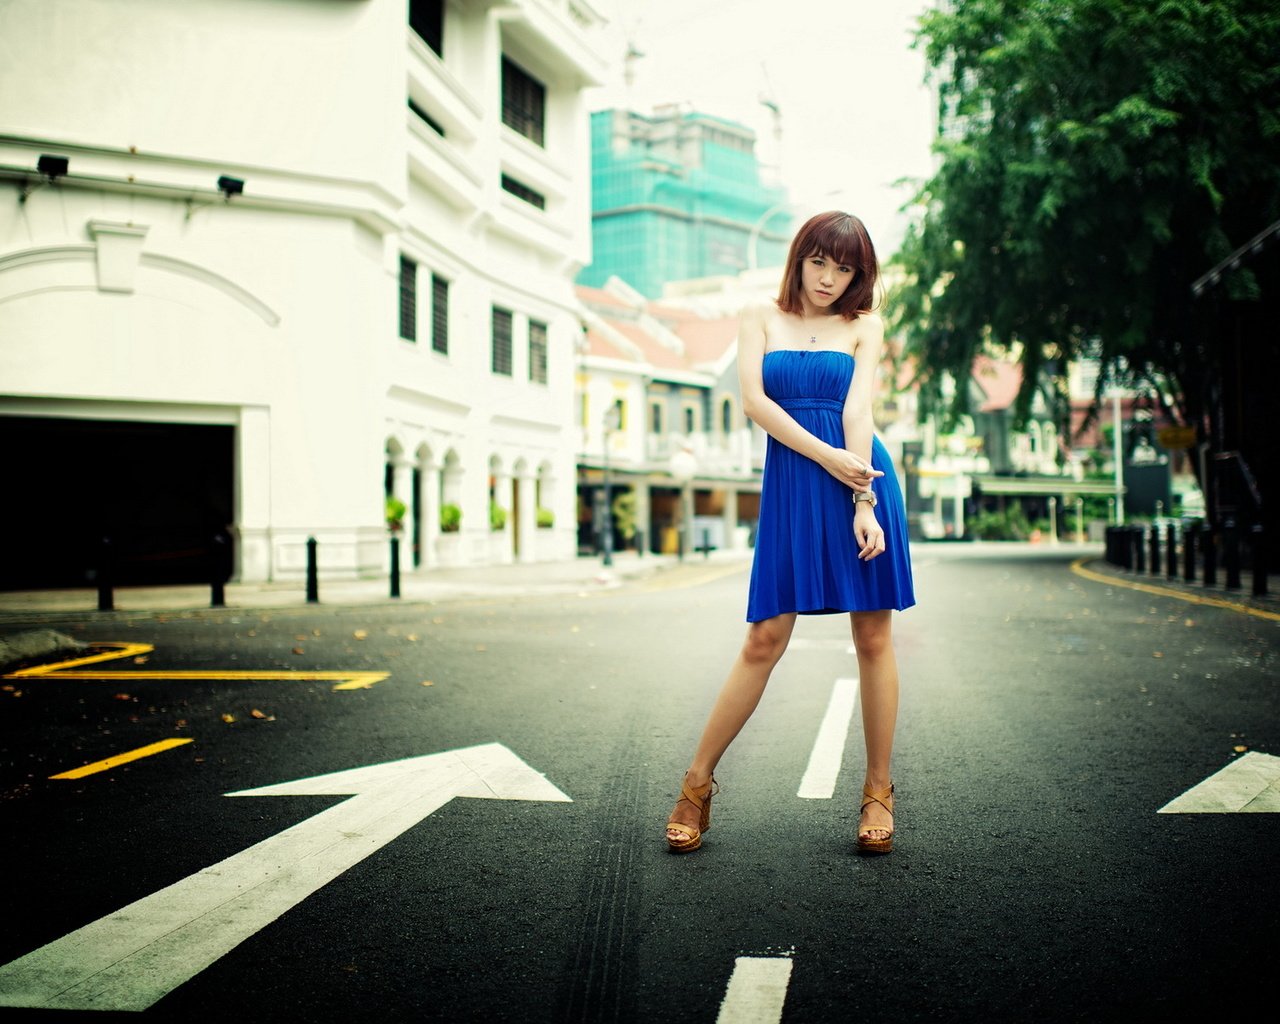 поза, взгляд, улица, лицо, азиатка, pinkiee hwang, синие платье, girl, pose...